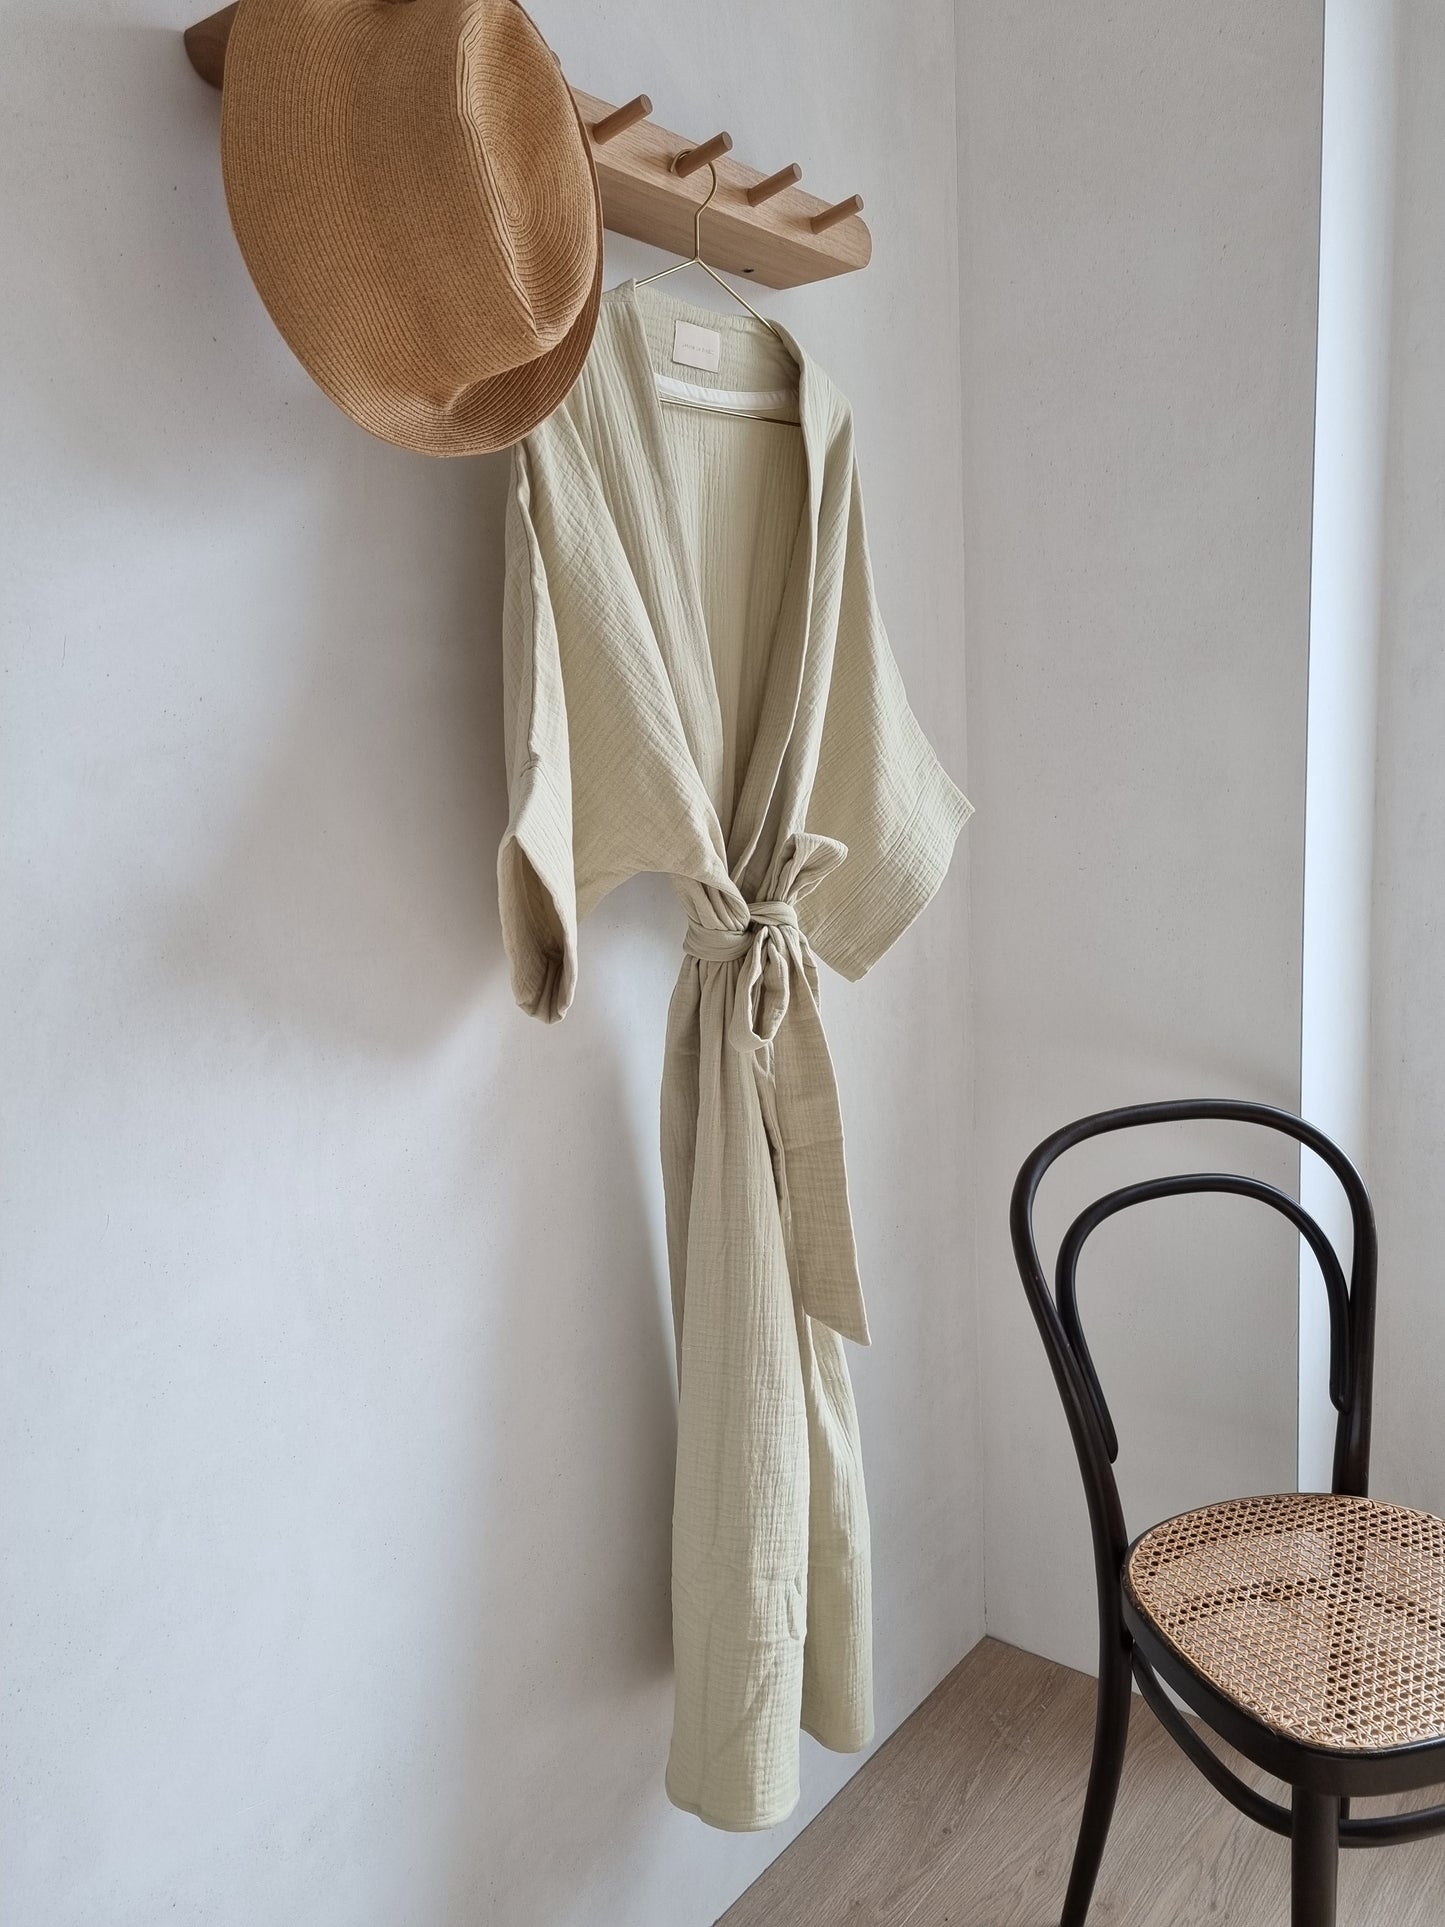 Jeanne Le Studio - Kimono "Wilma" | Light-Sage - Leja Concept Store